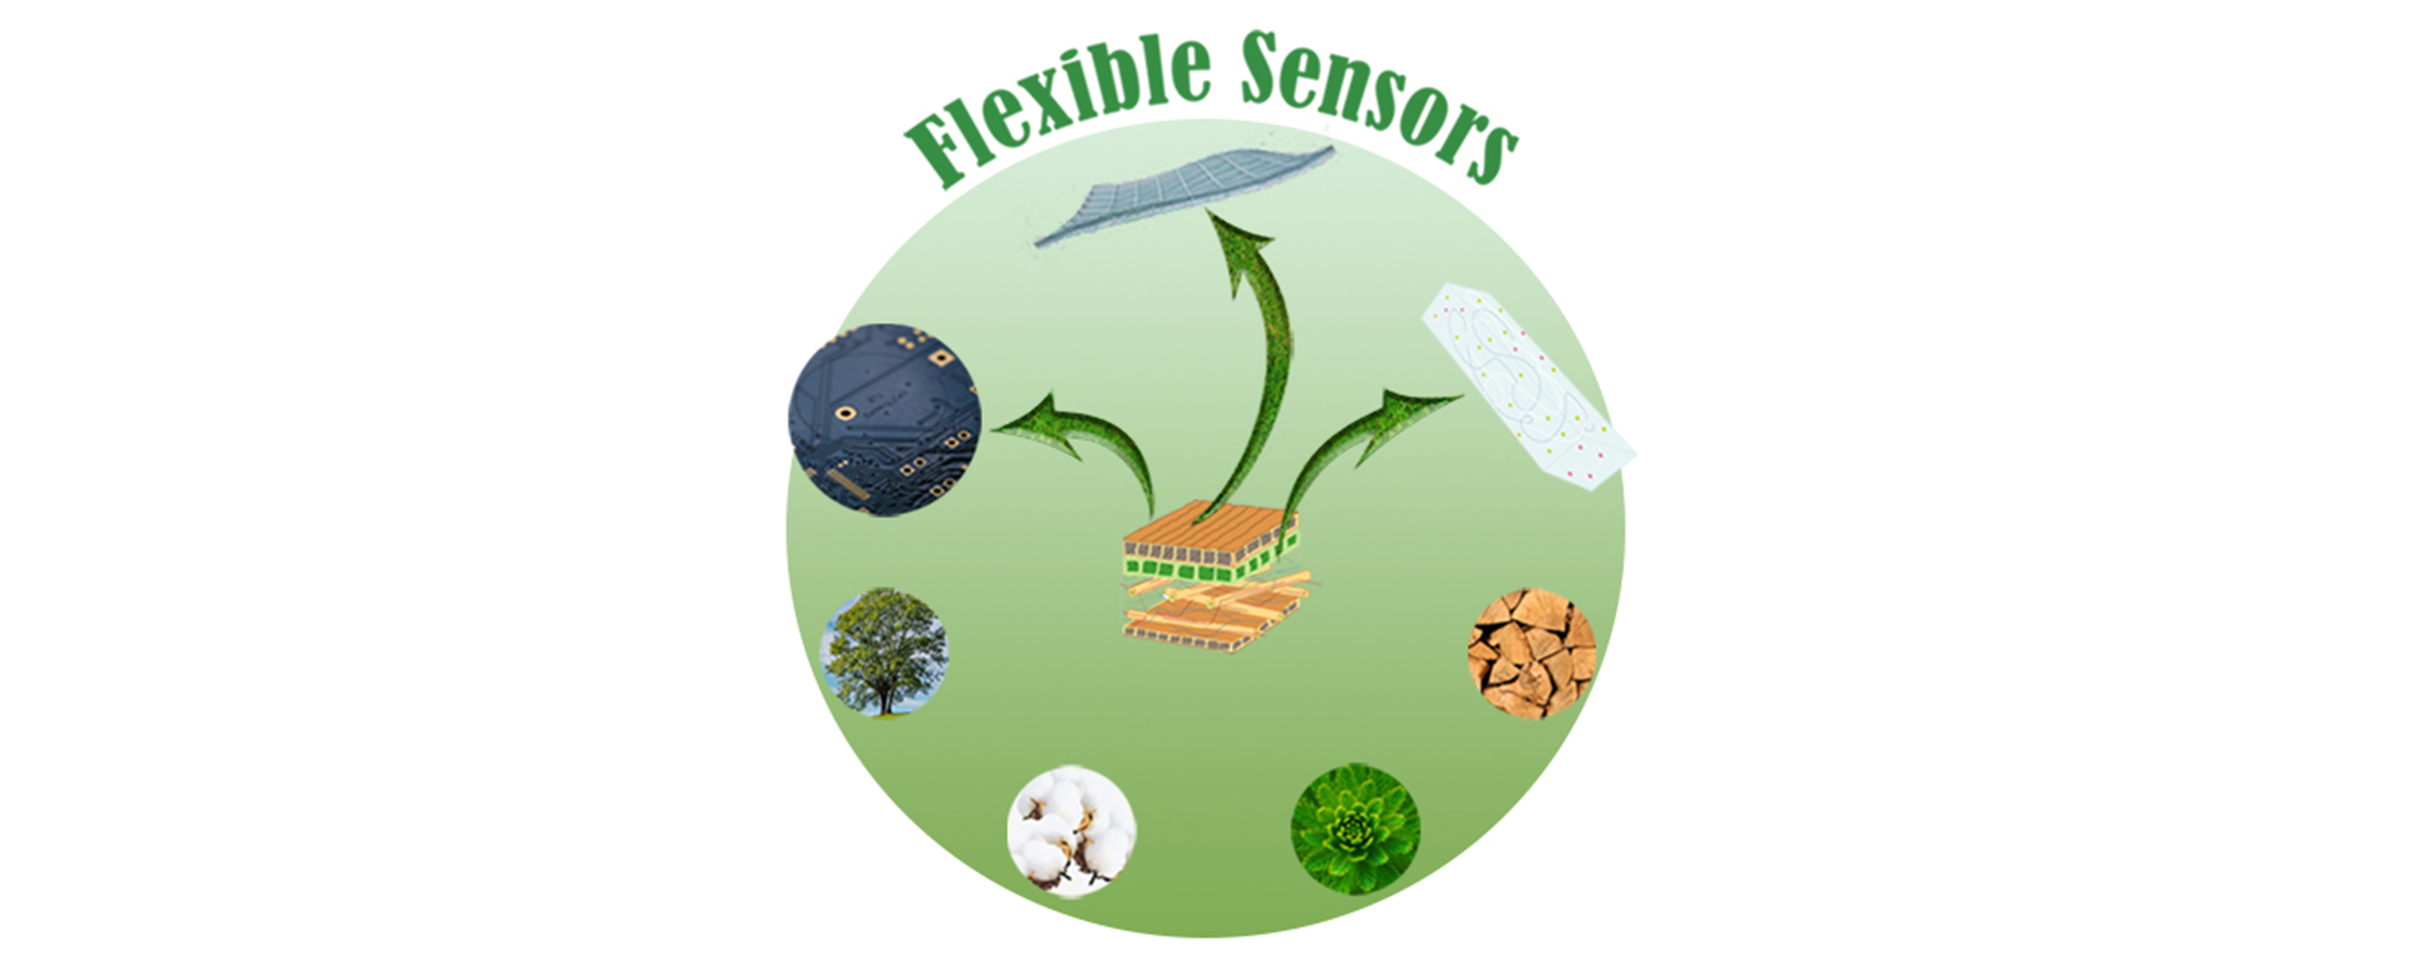 Recent Progress in Cellulose-Based Flexible Sensors